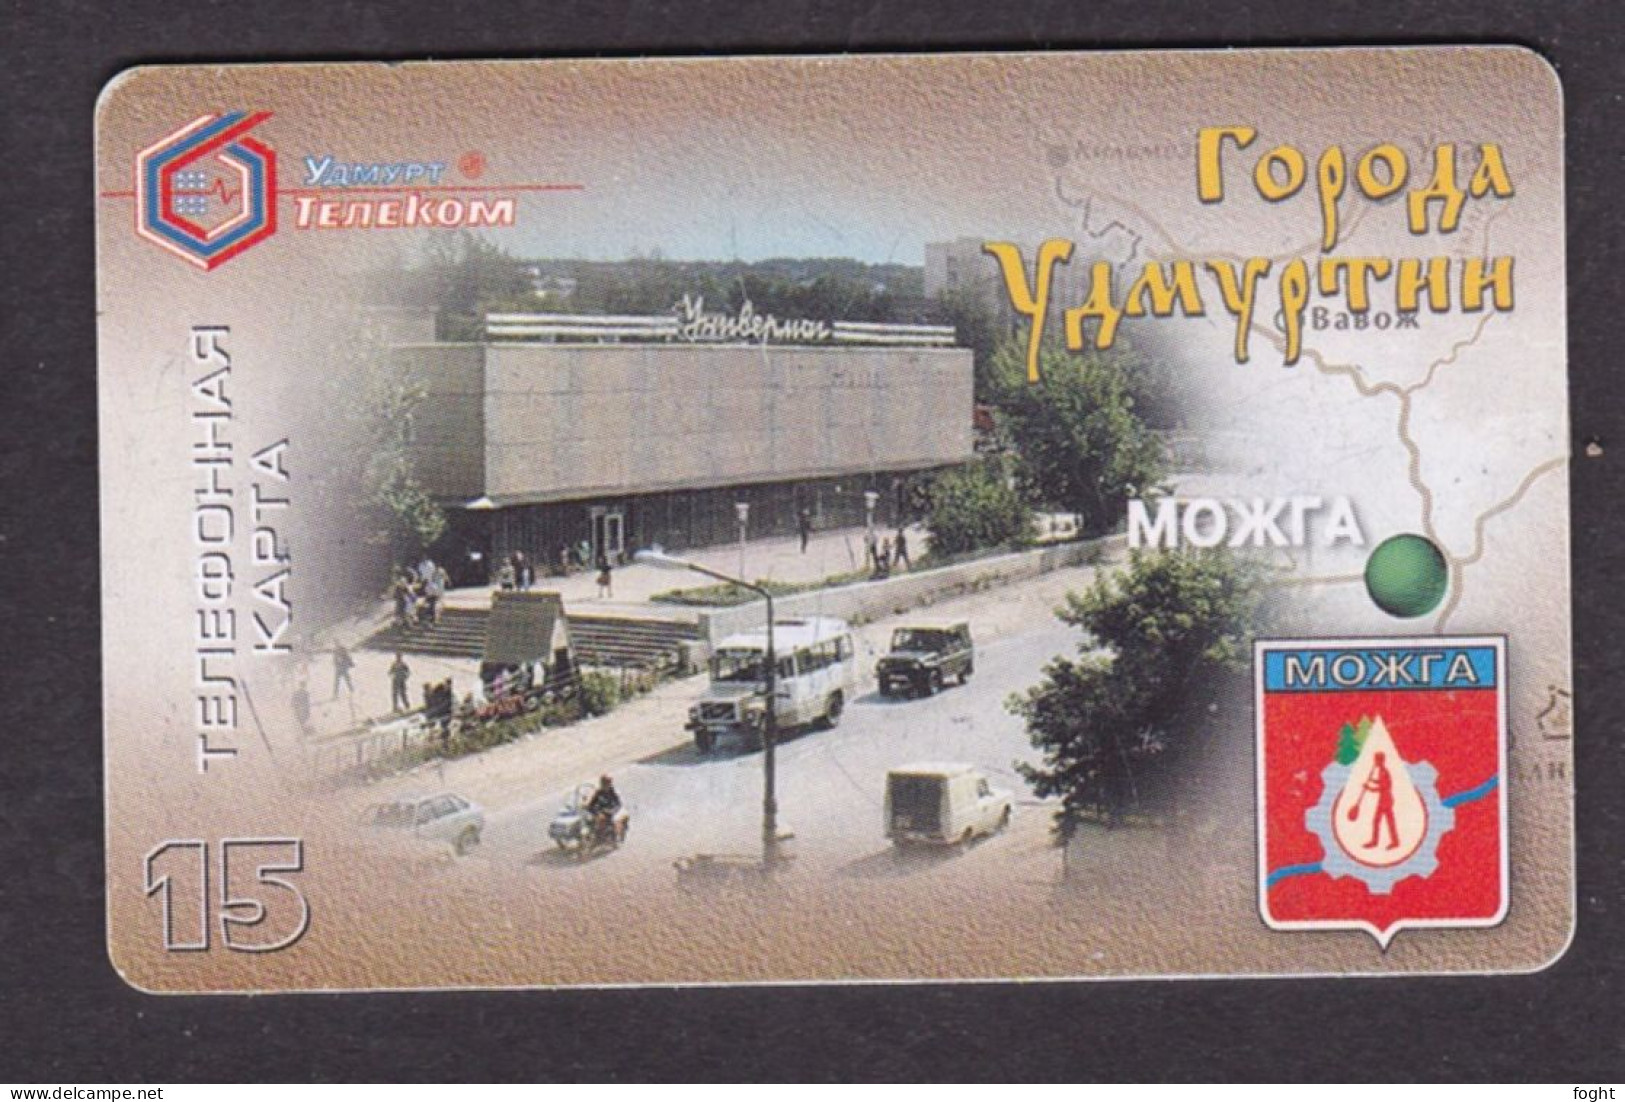 2000 Russia Udmurtia Province 15 Tariff Units Telephone Card - Russia